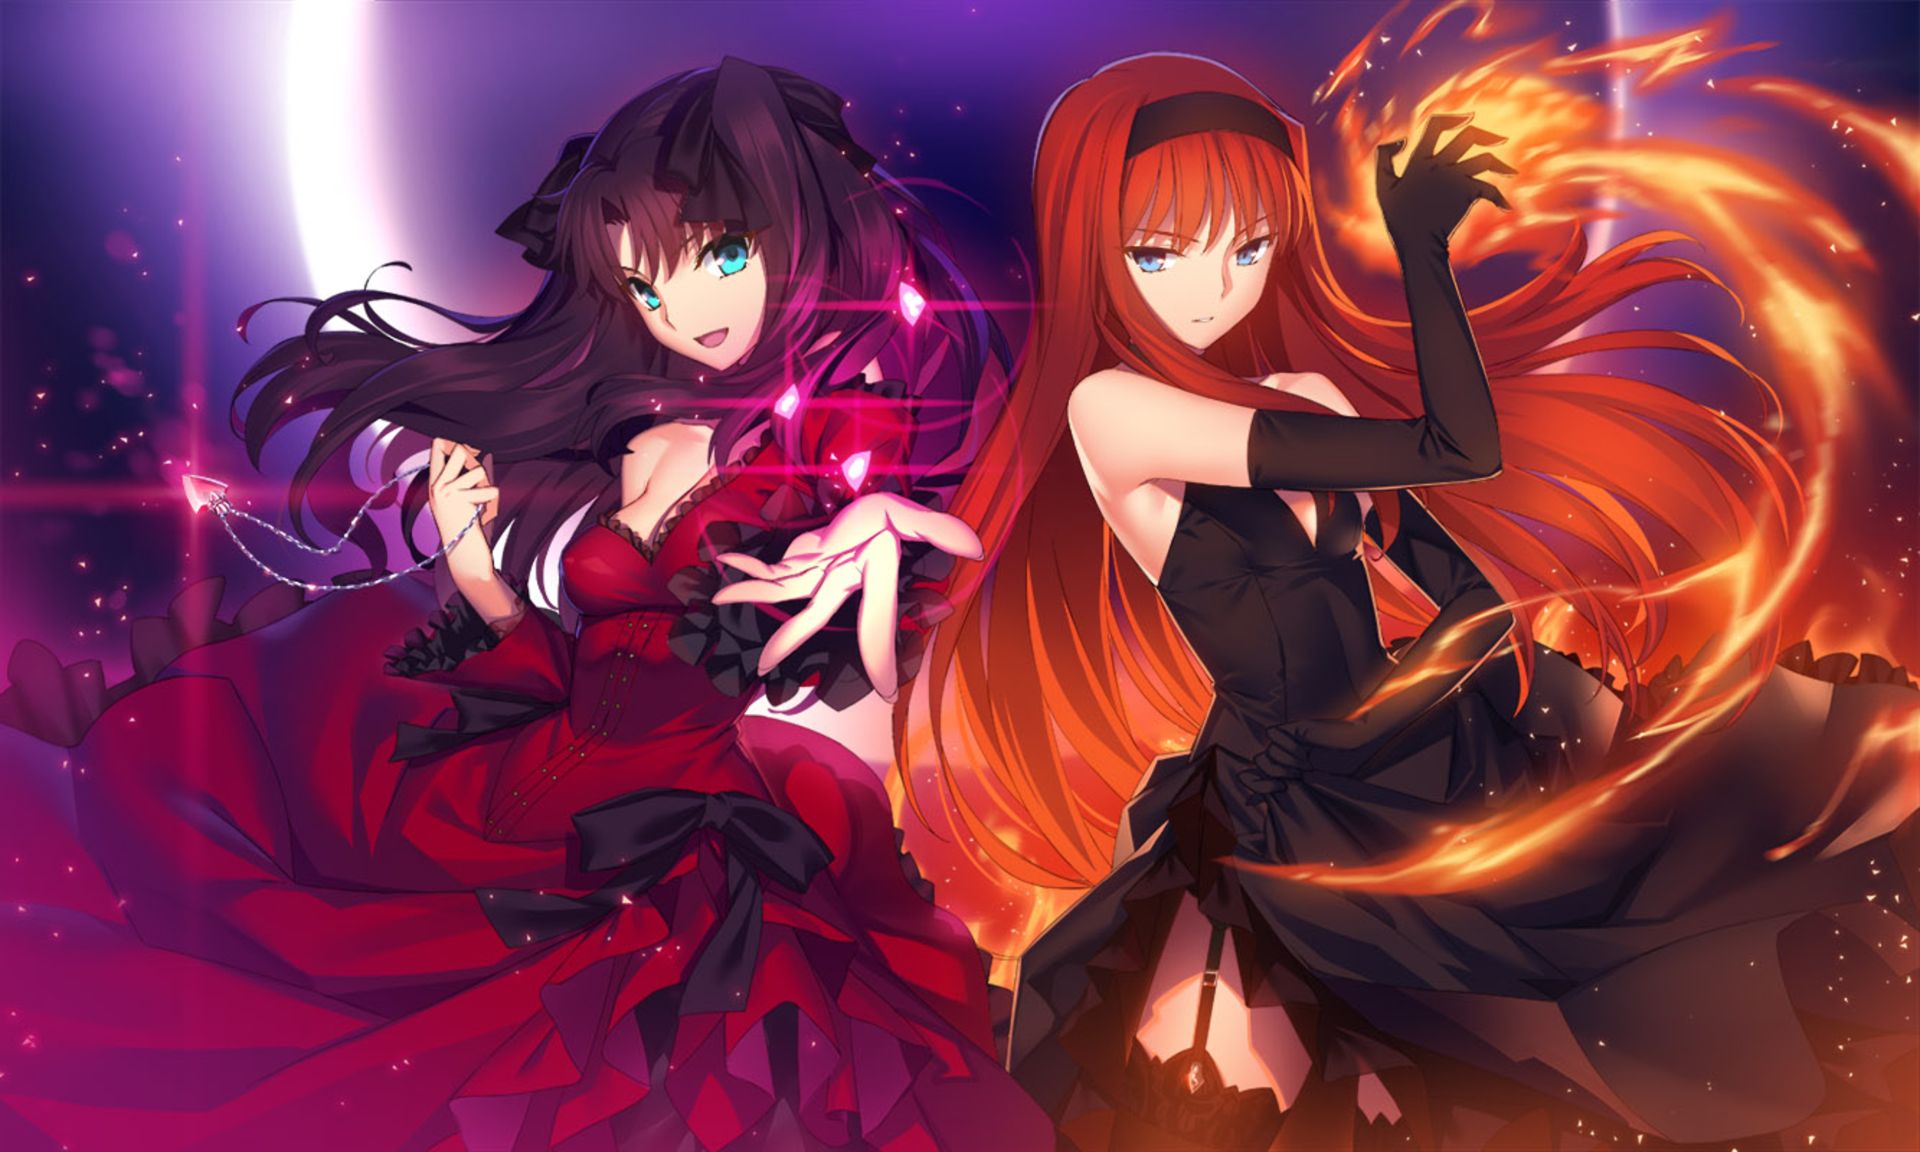 HD wallpaper anime, fate/stay night, black dress, flame, red dress, rin tohsaka, fate series